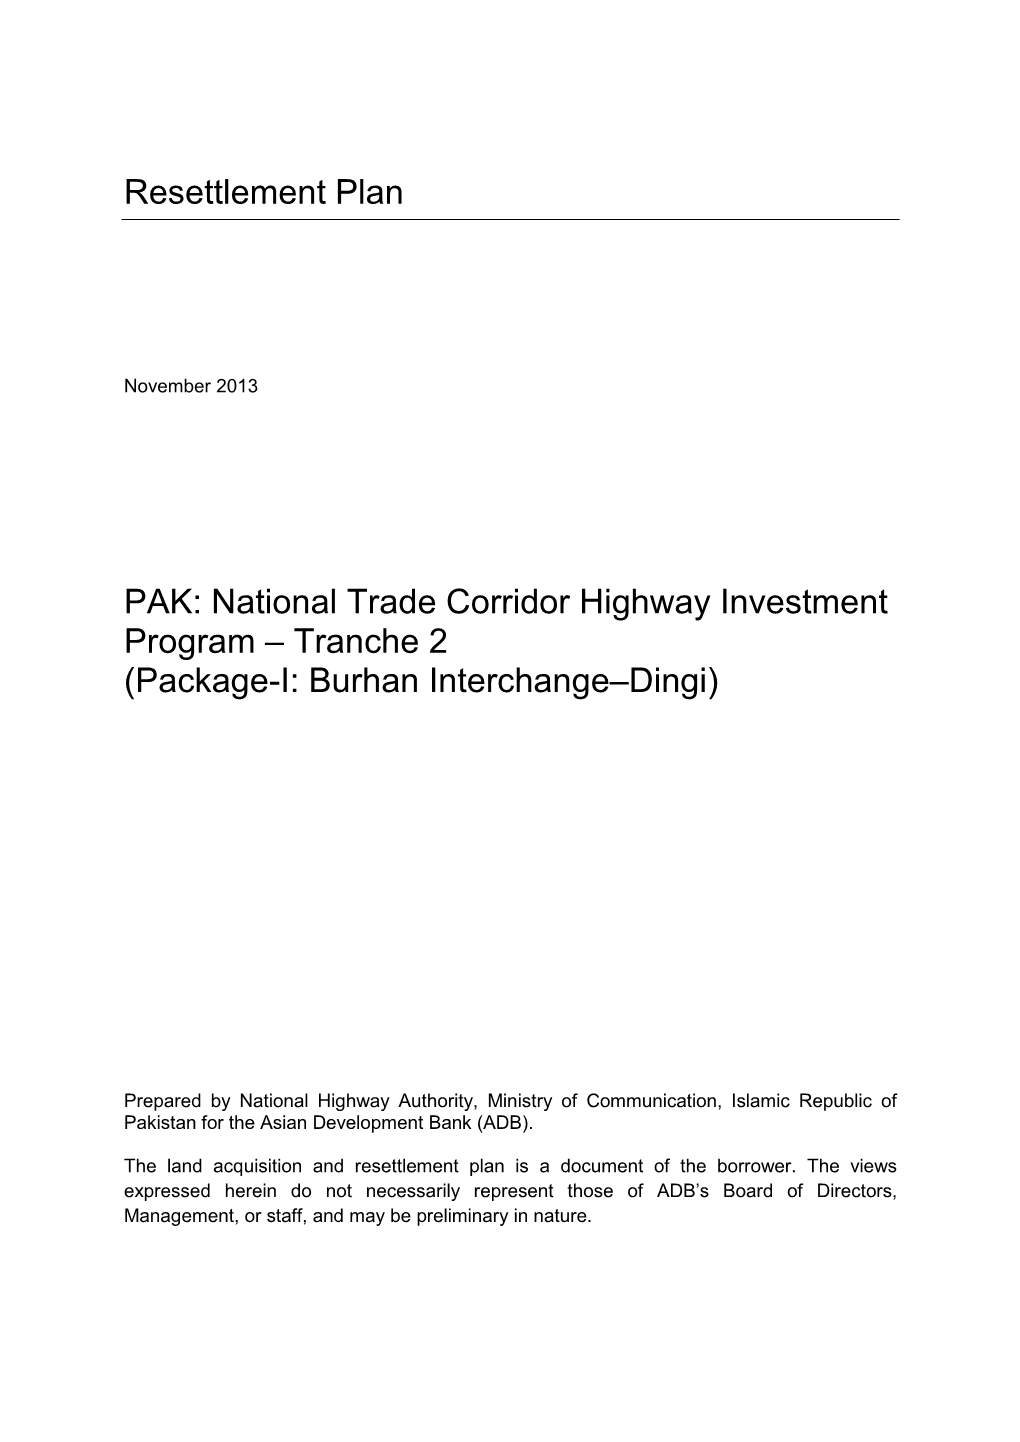 National Trade Corridor Highway Investment Program – Tranche 2 (Package-I: Burhan Interchange–Dingi)